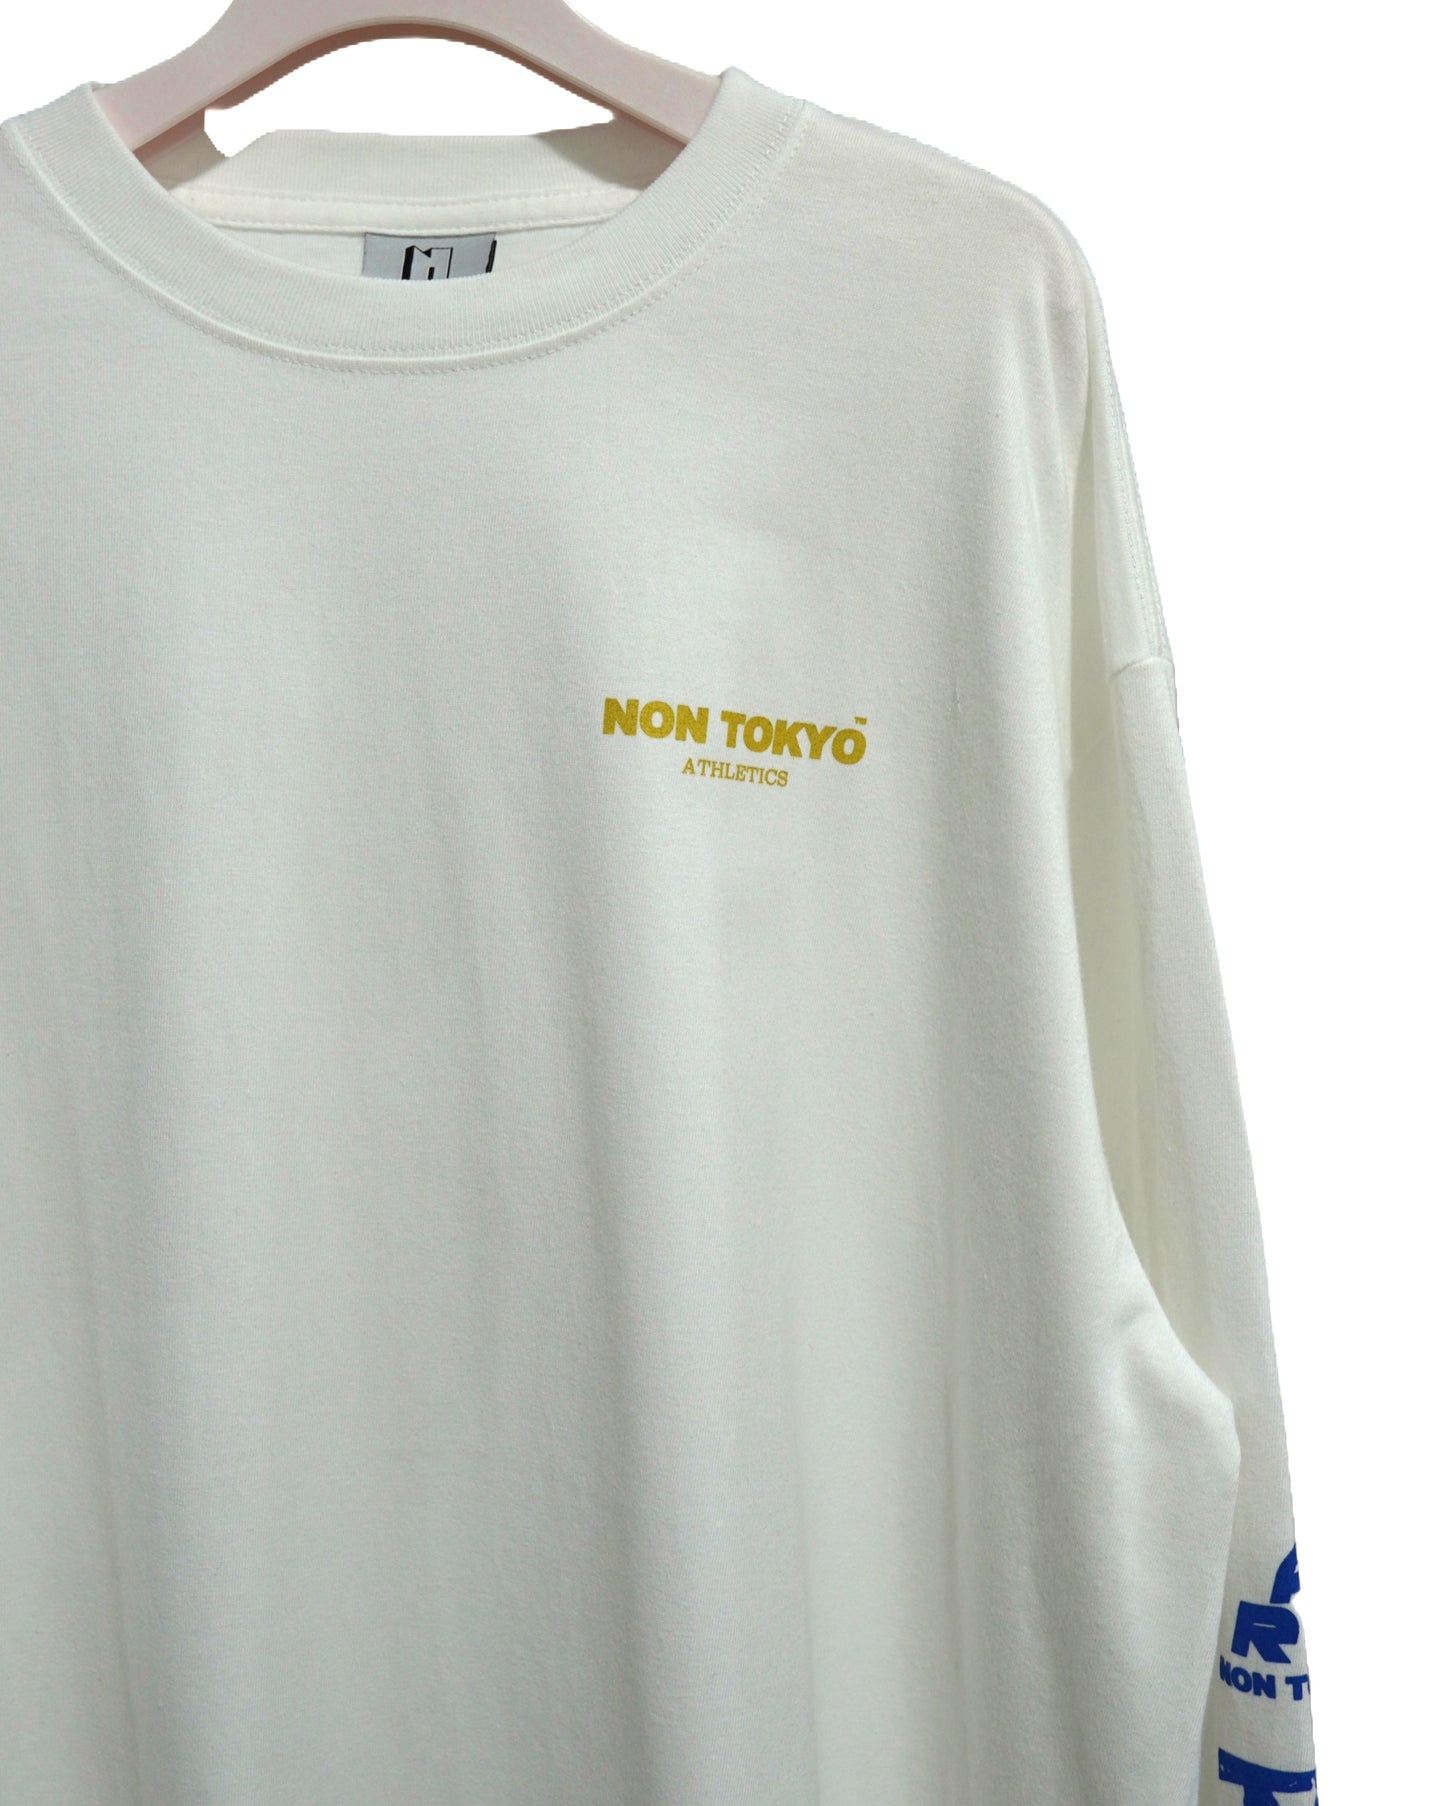 NON TOKYO /  PRINT L/S T-SHIRT (SLEEVE / WHITE ) / 〈ノントーキョー〉プリントロングスリーブTシャツ (スリーブ / ホワイト)